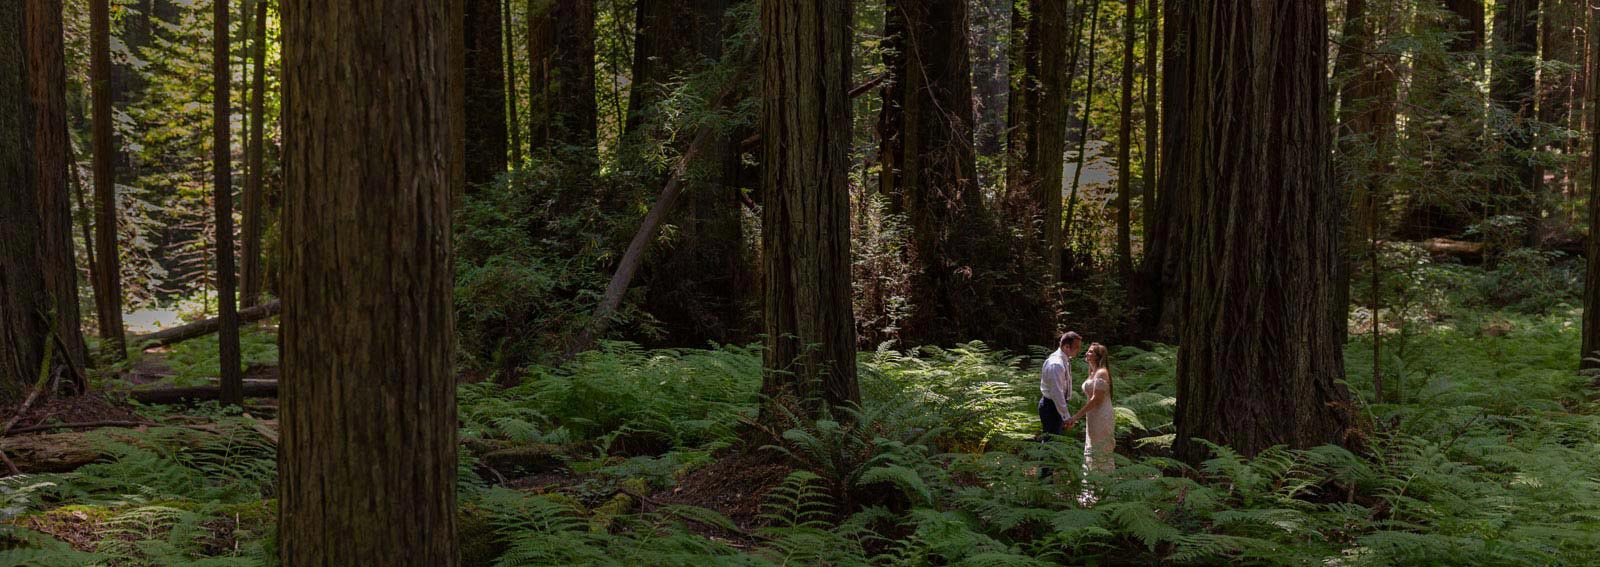 redwood forest elopement wedding California